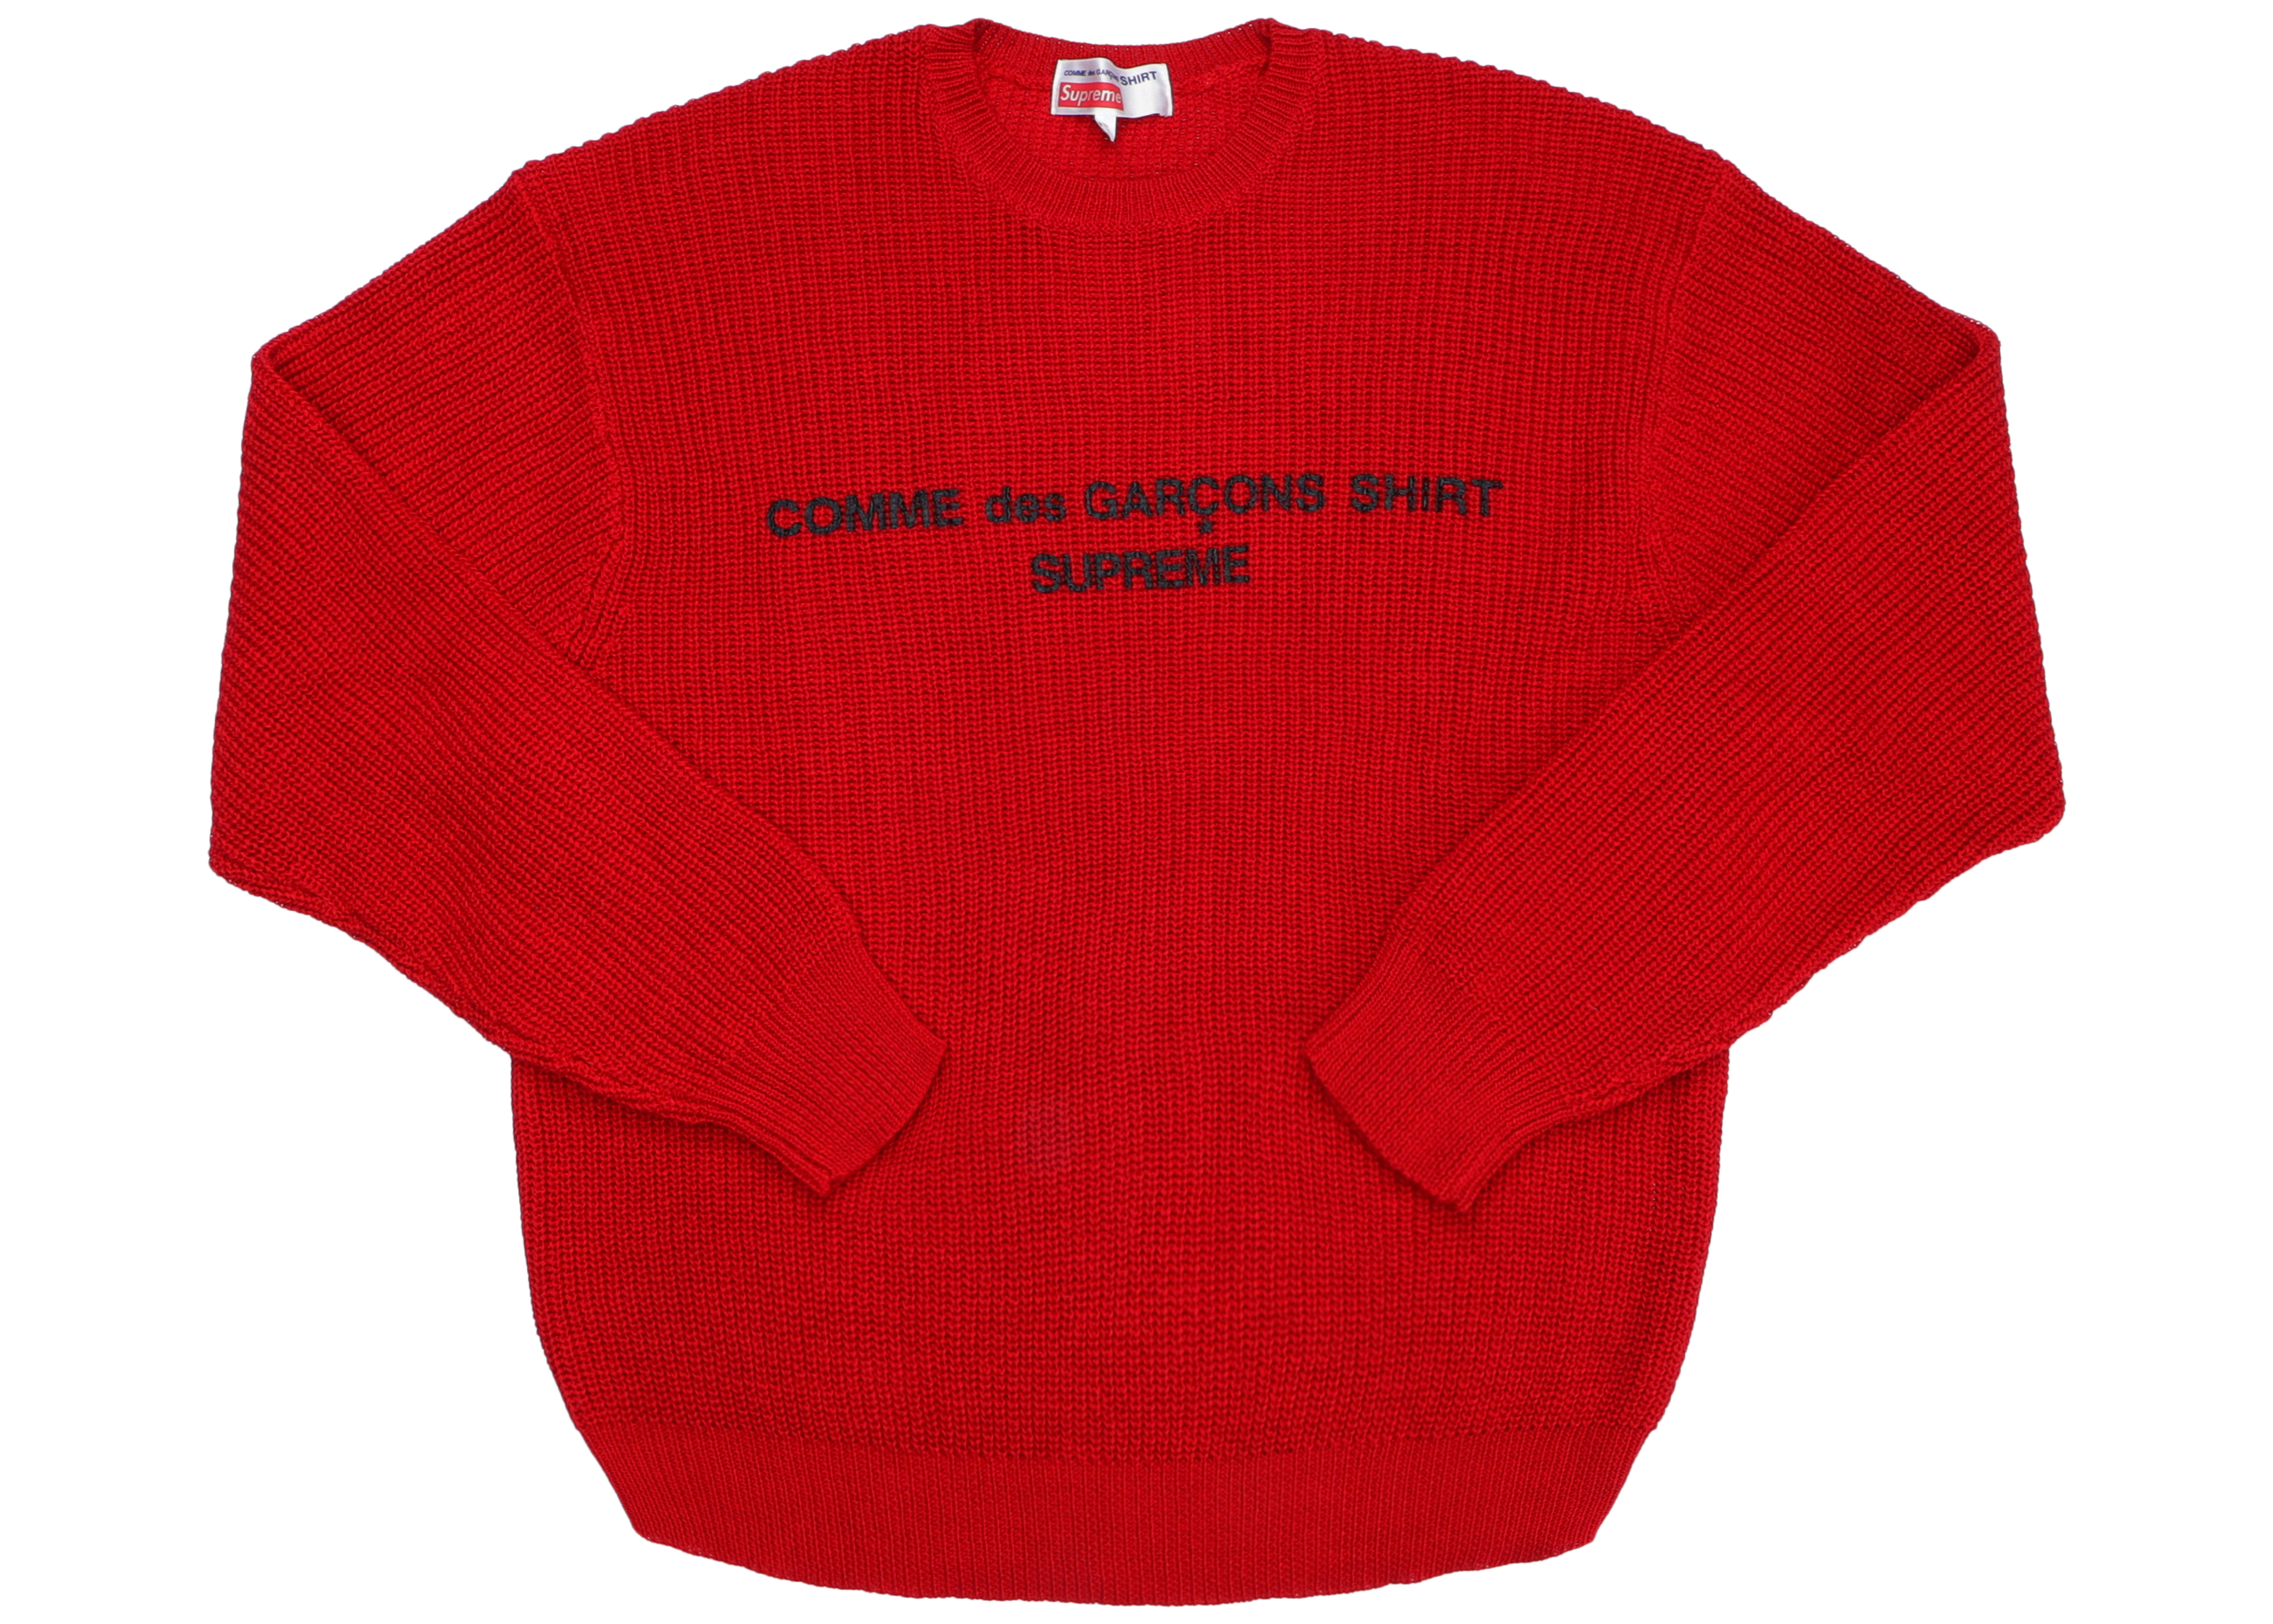 Supreme Comme des Garcons SHIRT Sweater Red Men's - FW18 - US